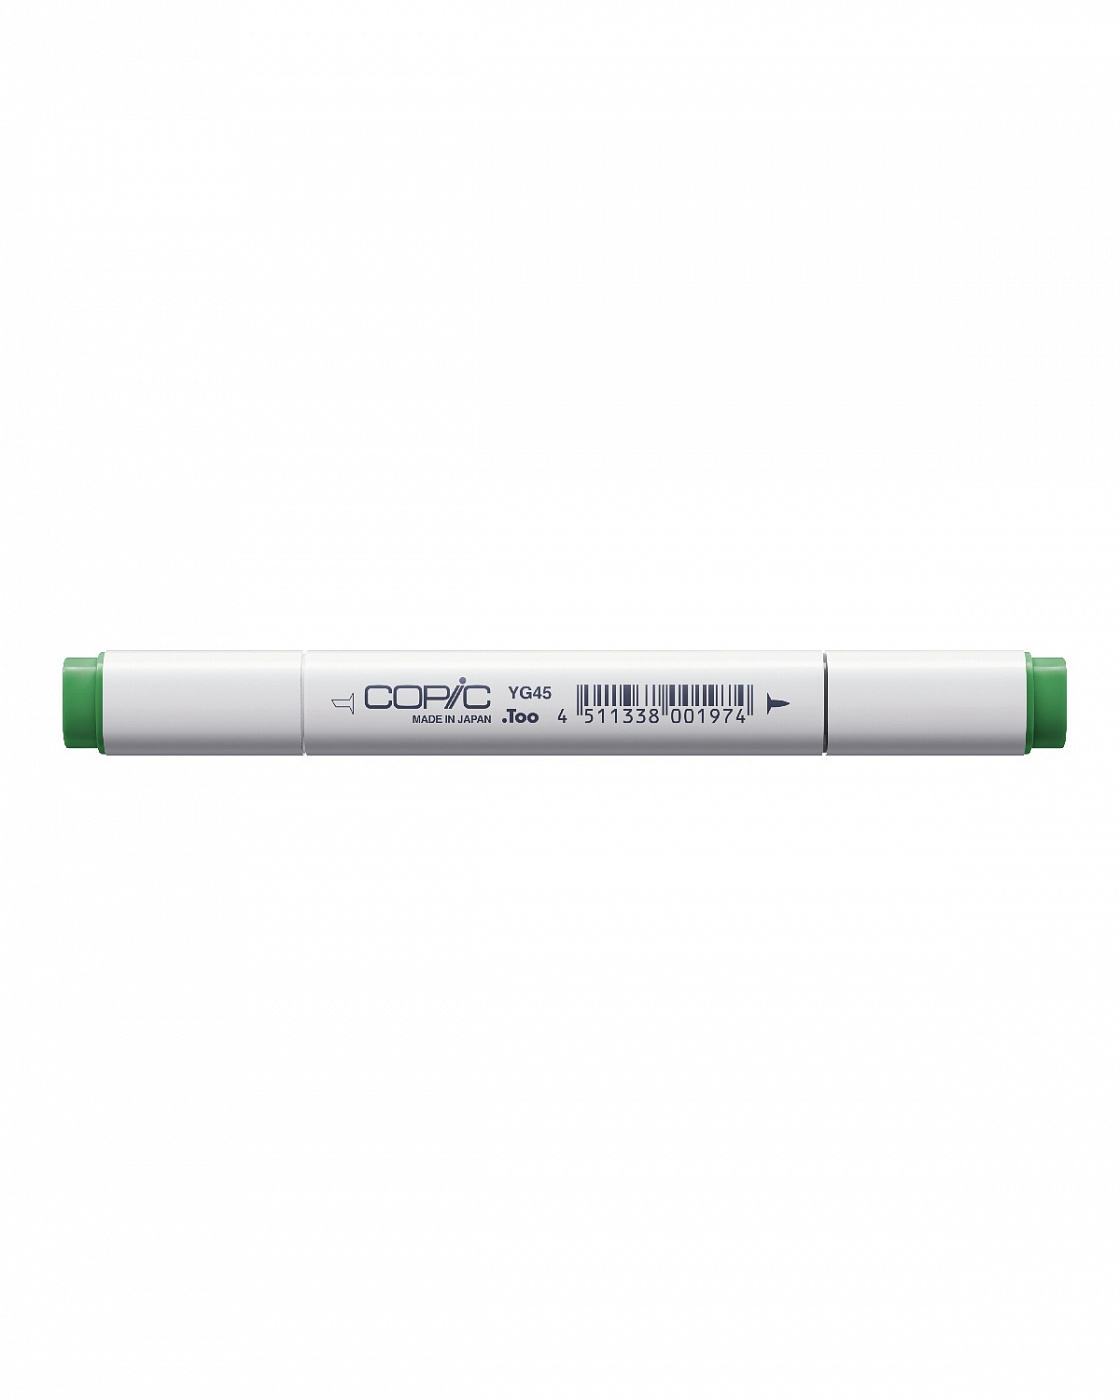 Маркер COPIC YG45 (кобальт зеленый, cobalt green) маркер copic g07 зеленый нил nile green